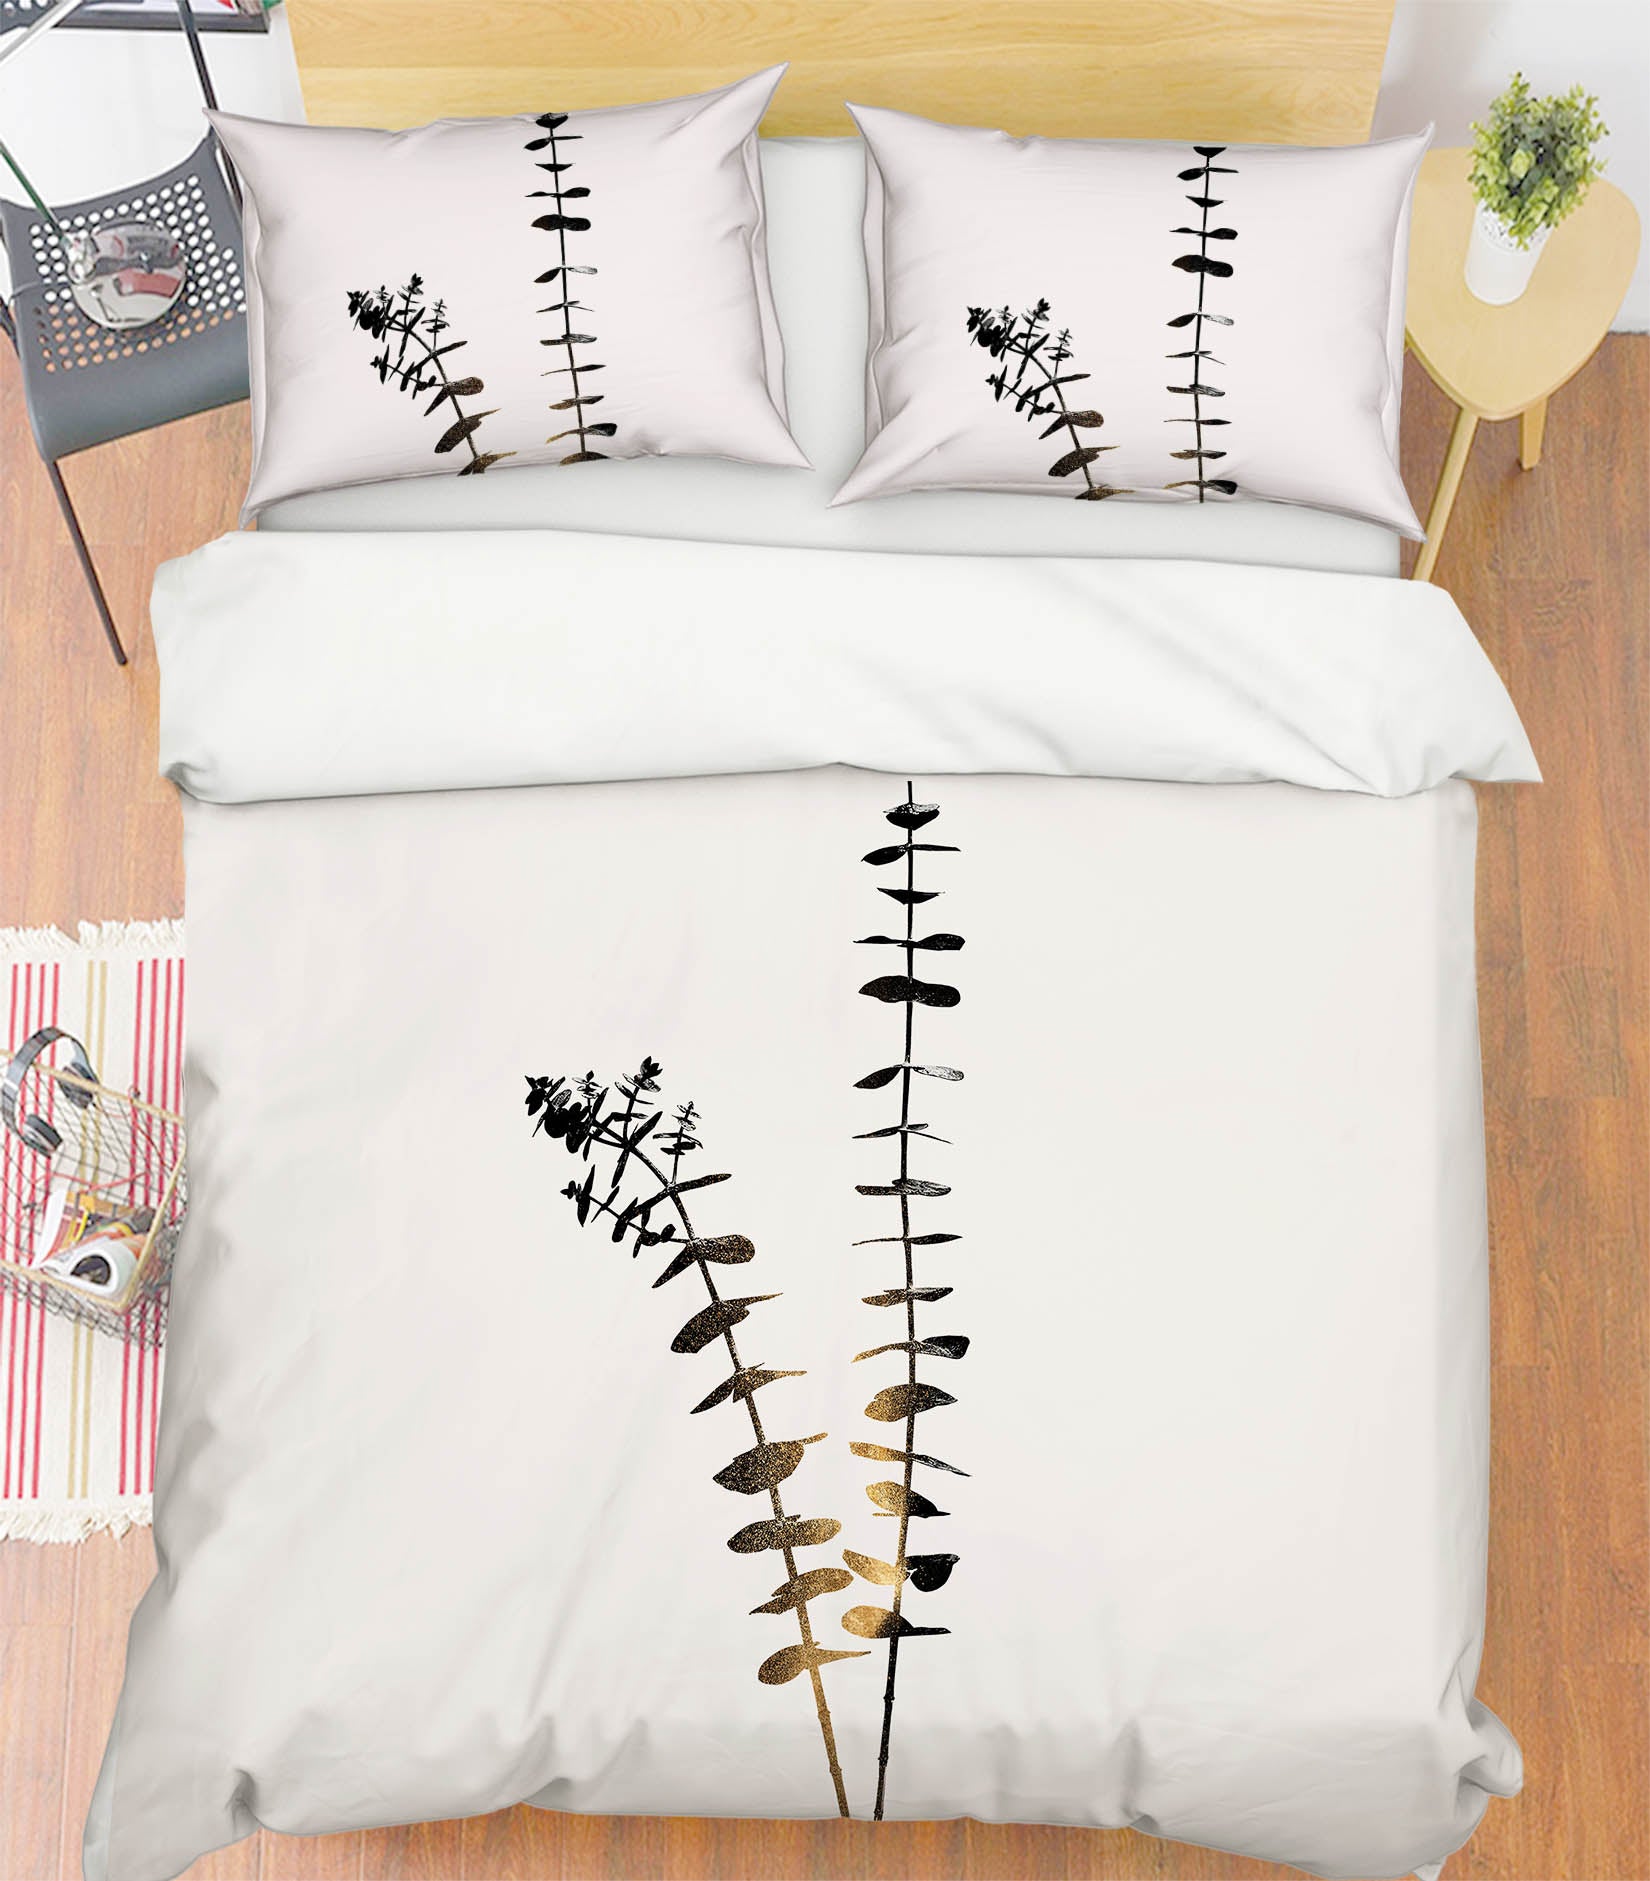 3D Leaf Growth 142 Boris Draschoff Bedding Bed Pillowcases Quilt